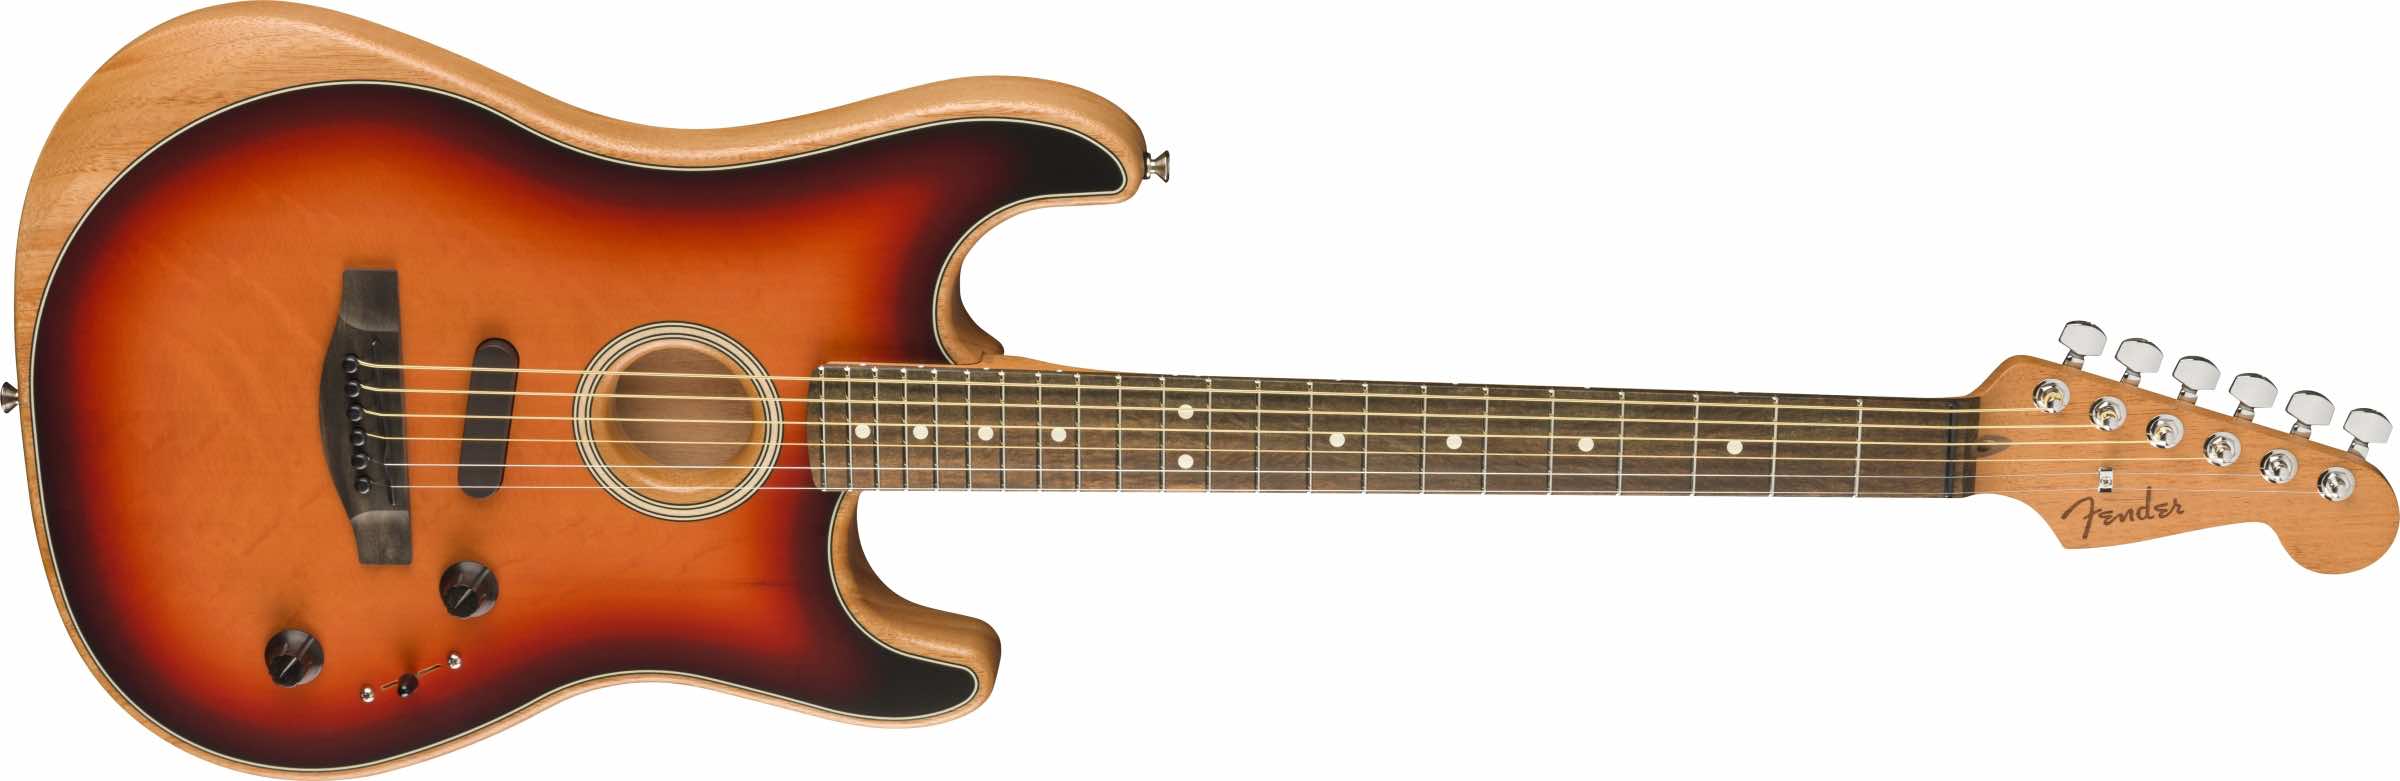 Fender Acoustasonic 3-Color Sunburst american stratocaster chitarra acustica guitar elettroacustica strumenti musicali